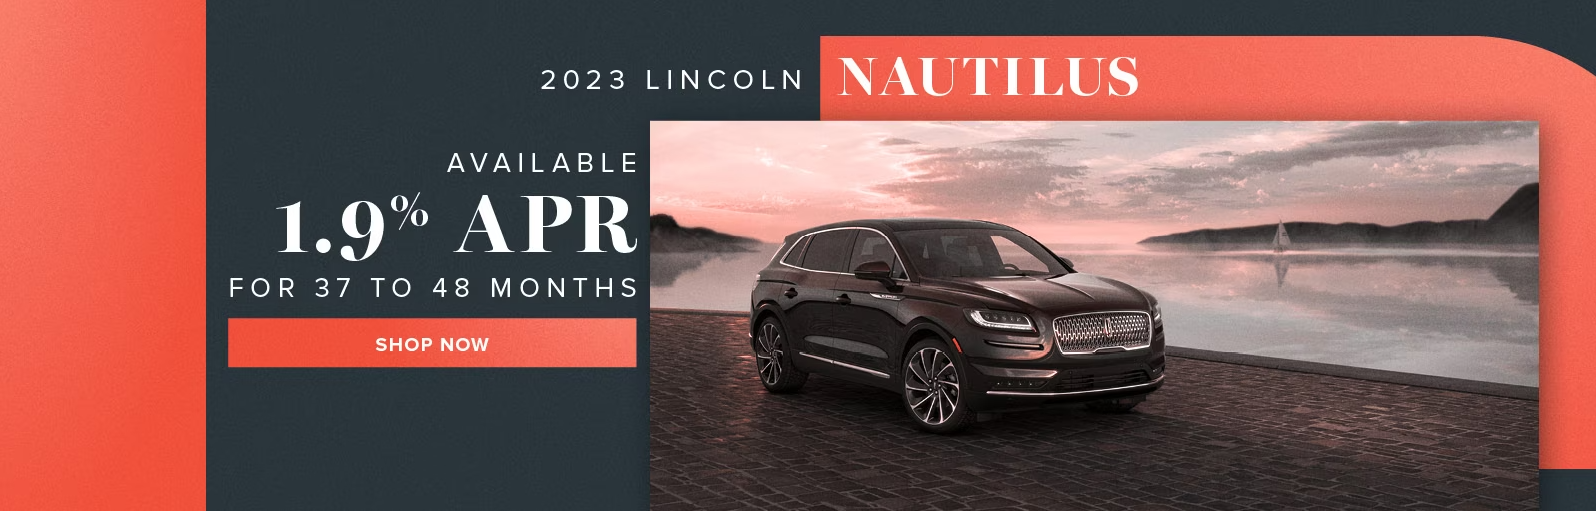 2023 Lincoln Nautilus Special